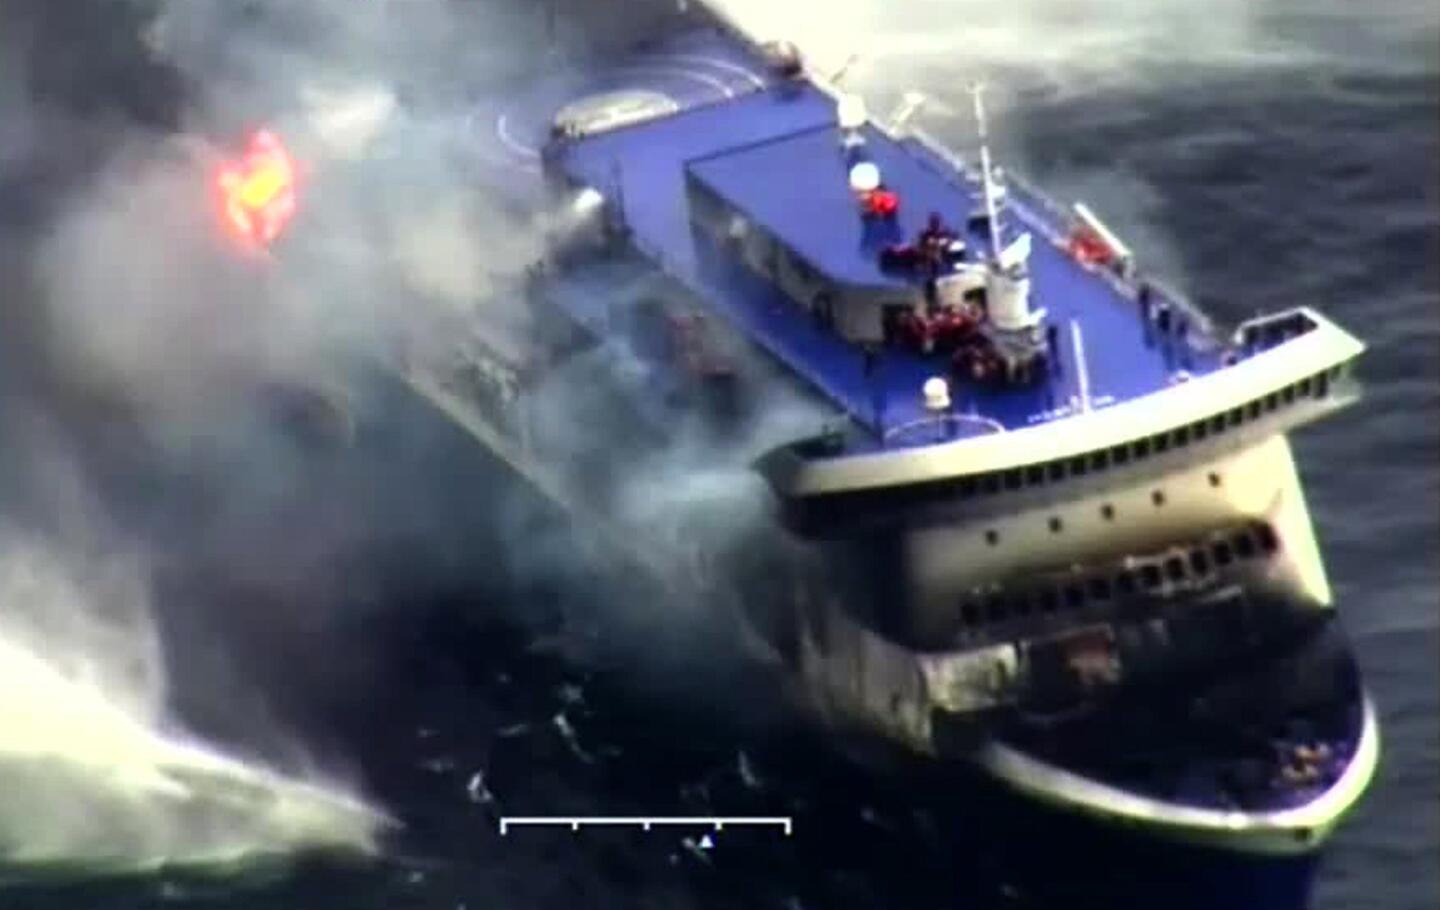 The burning ferry "Norman Atlantic" adrift off Albania.